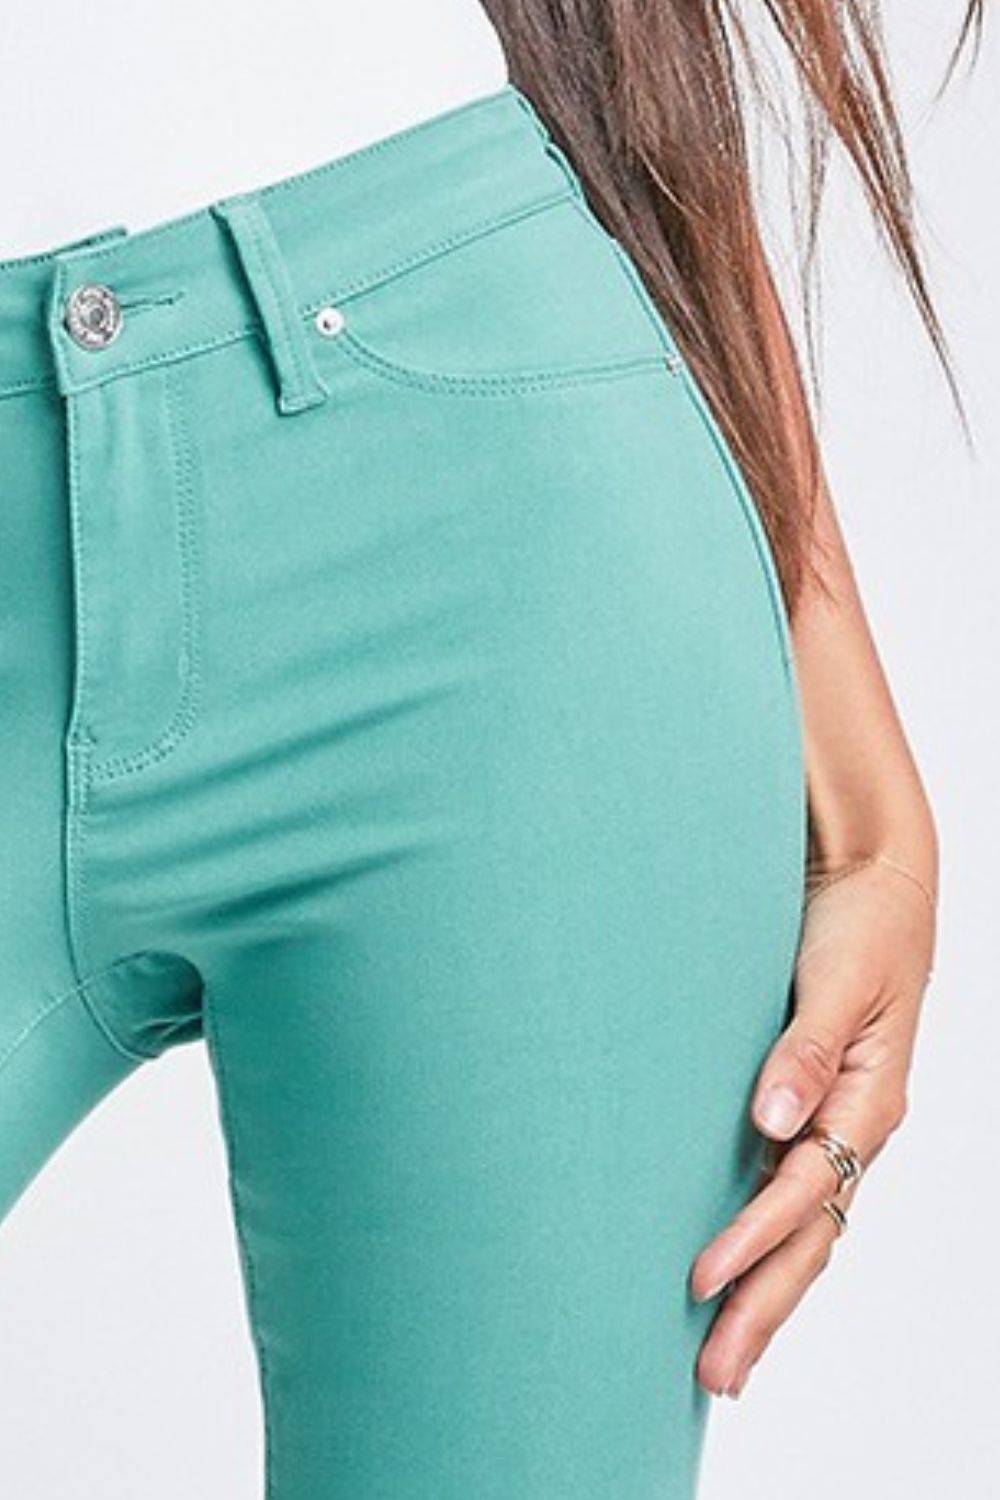 Sea Green Small-3XL Hyper stretch Mid-Rise Skinny Pants - Tigbuls Variety Fashion